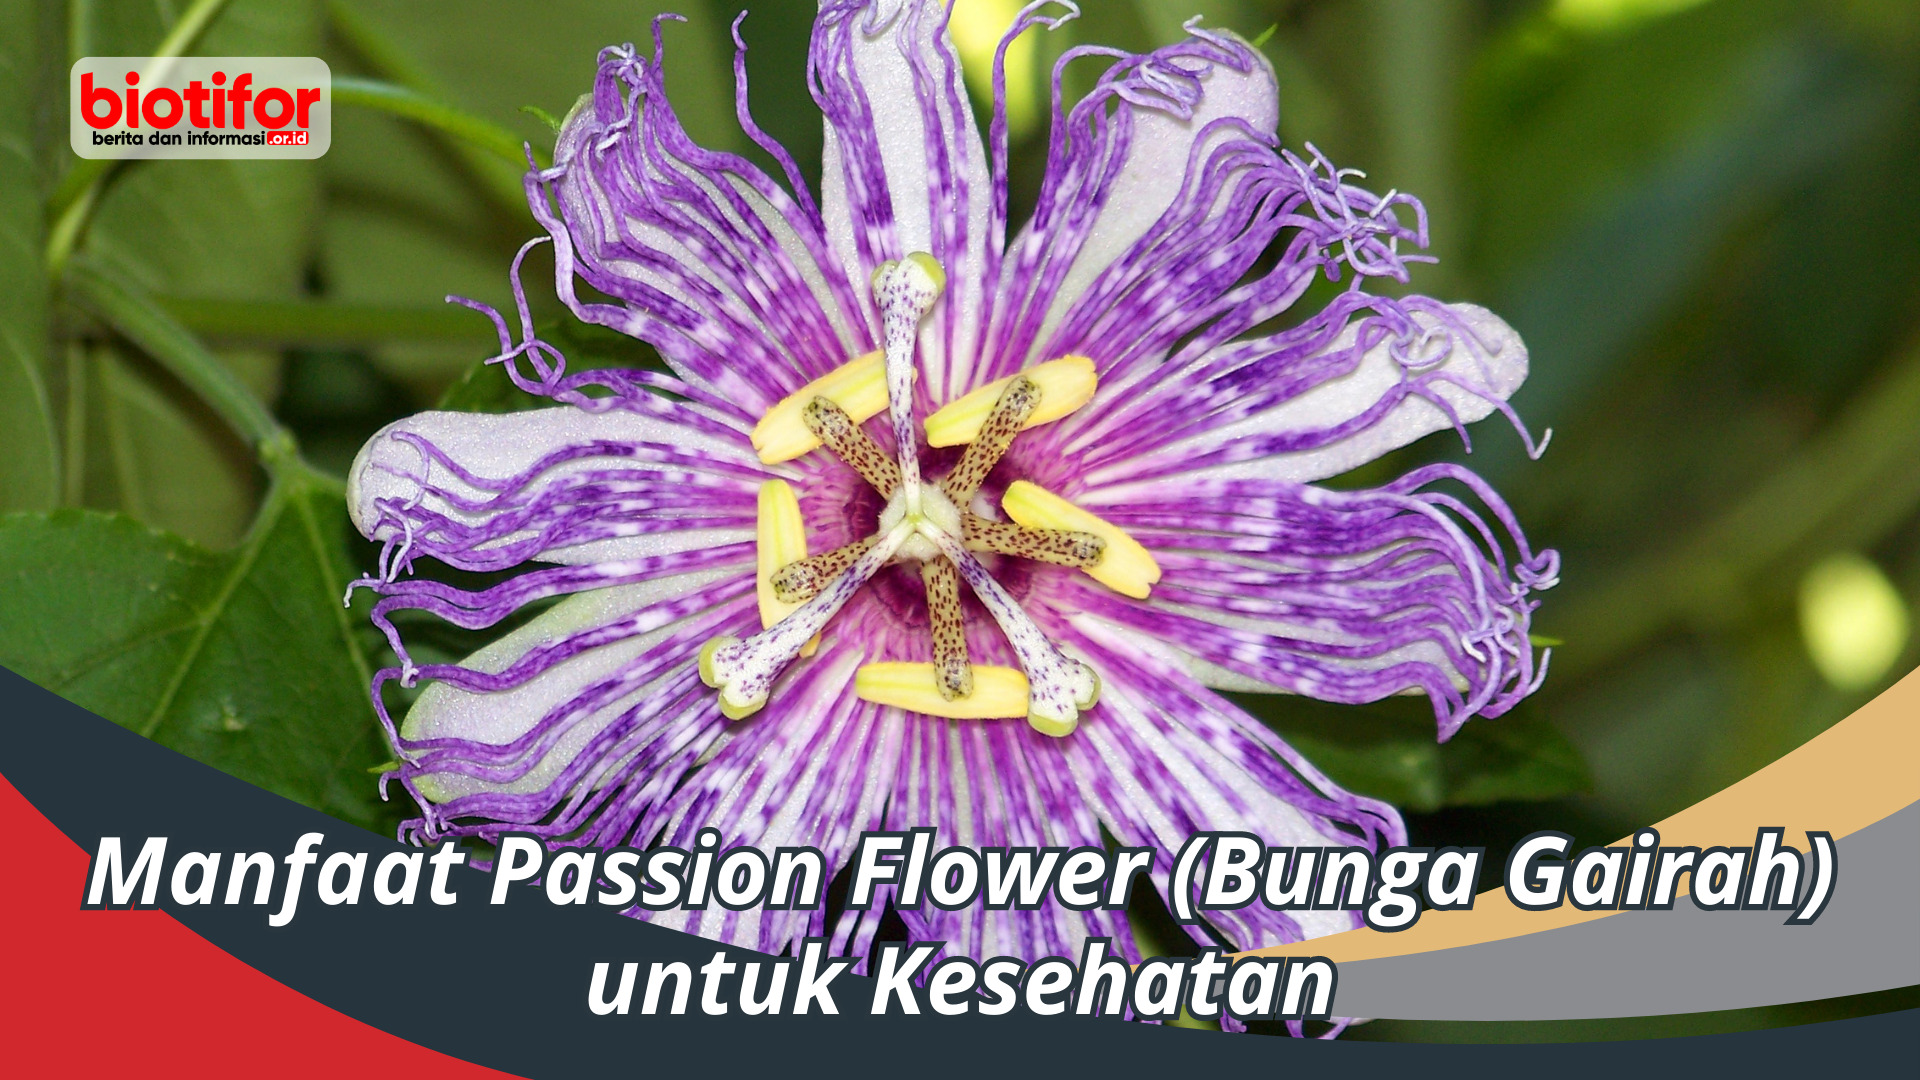 Manfaat Passion Flower